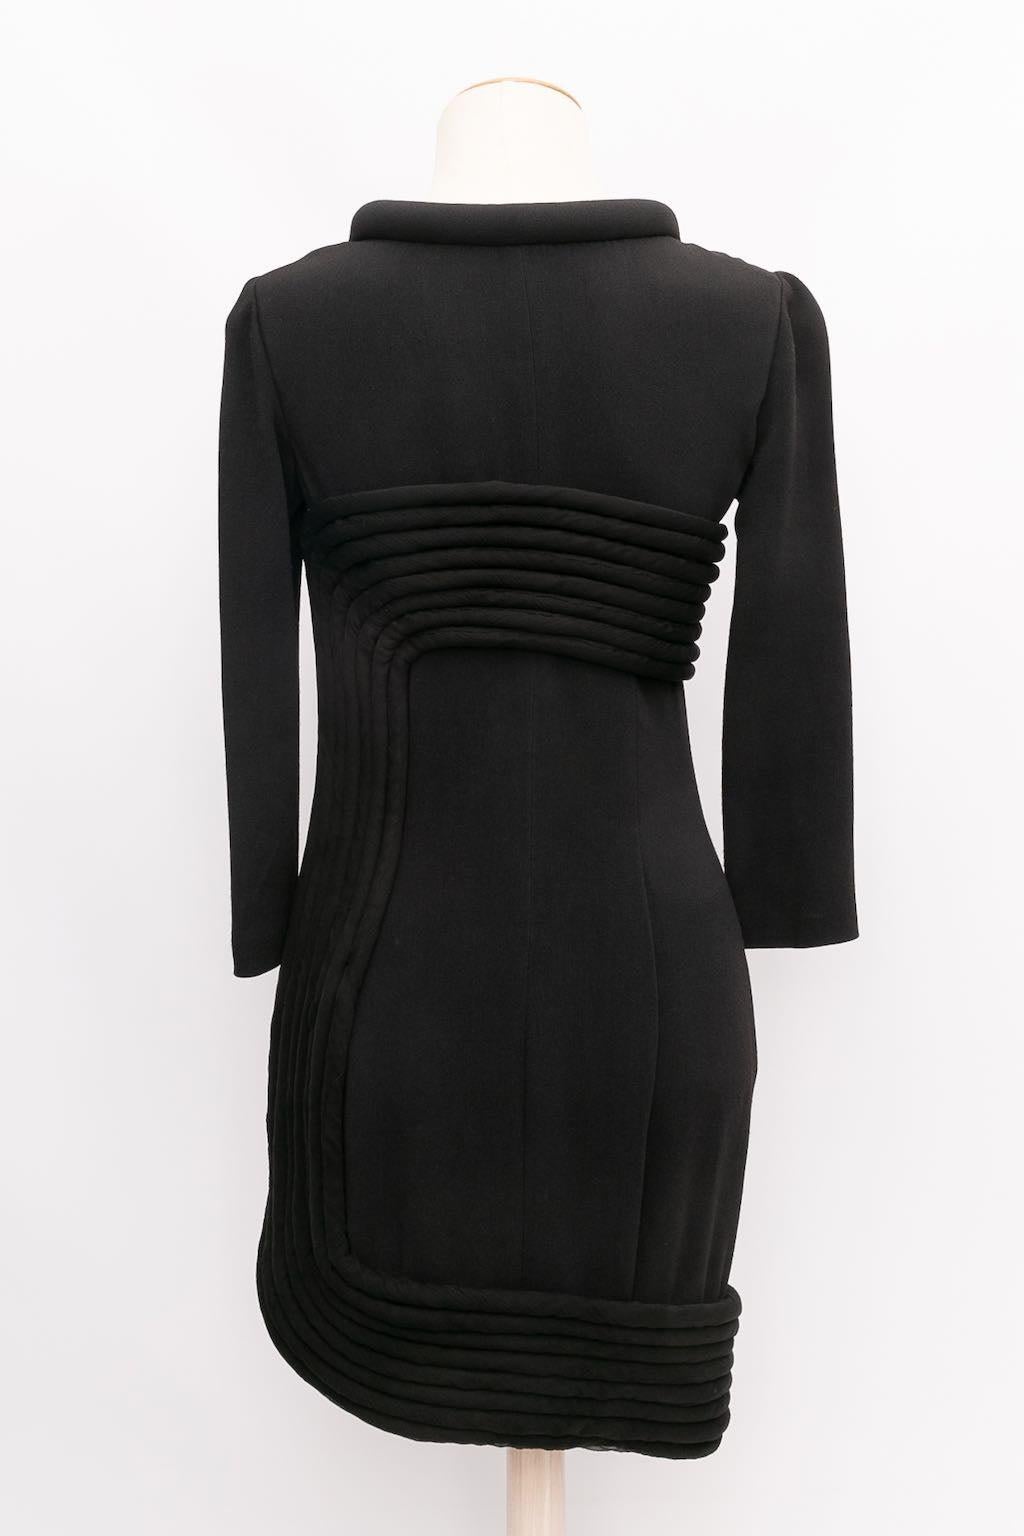 Balmain Wool and Silk Black Dress In Excellent Condition For Sale In SAINT-OUEN-SUR-SEINE, FR